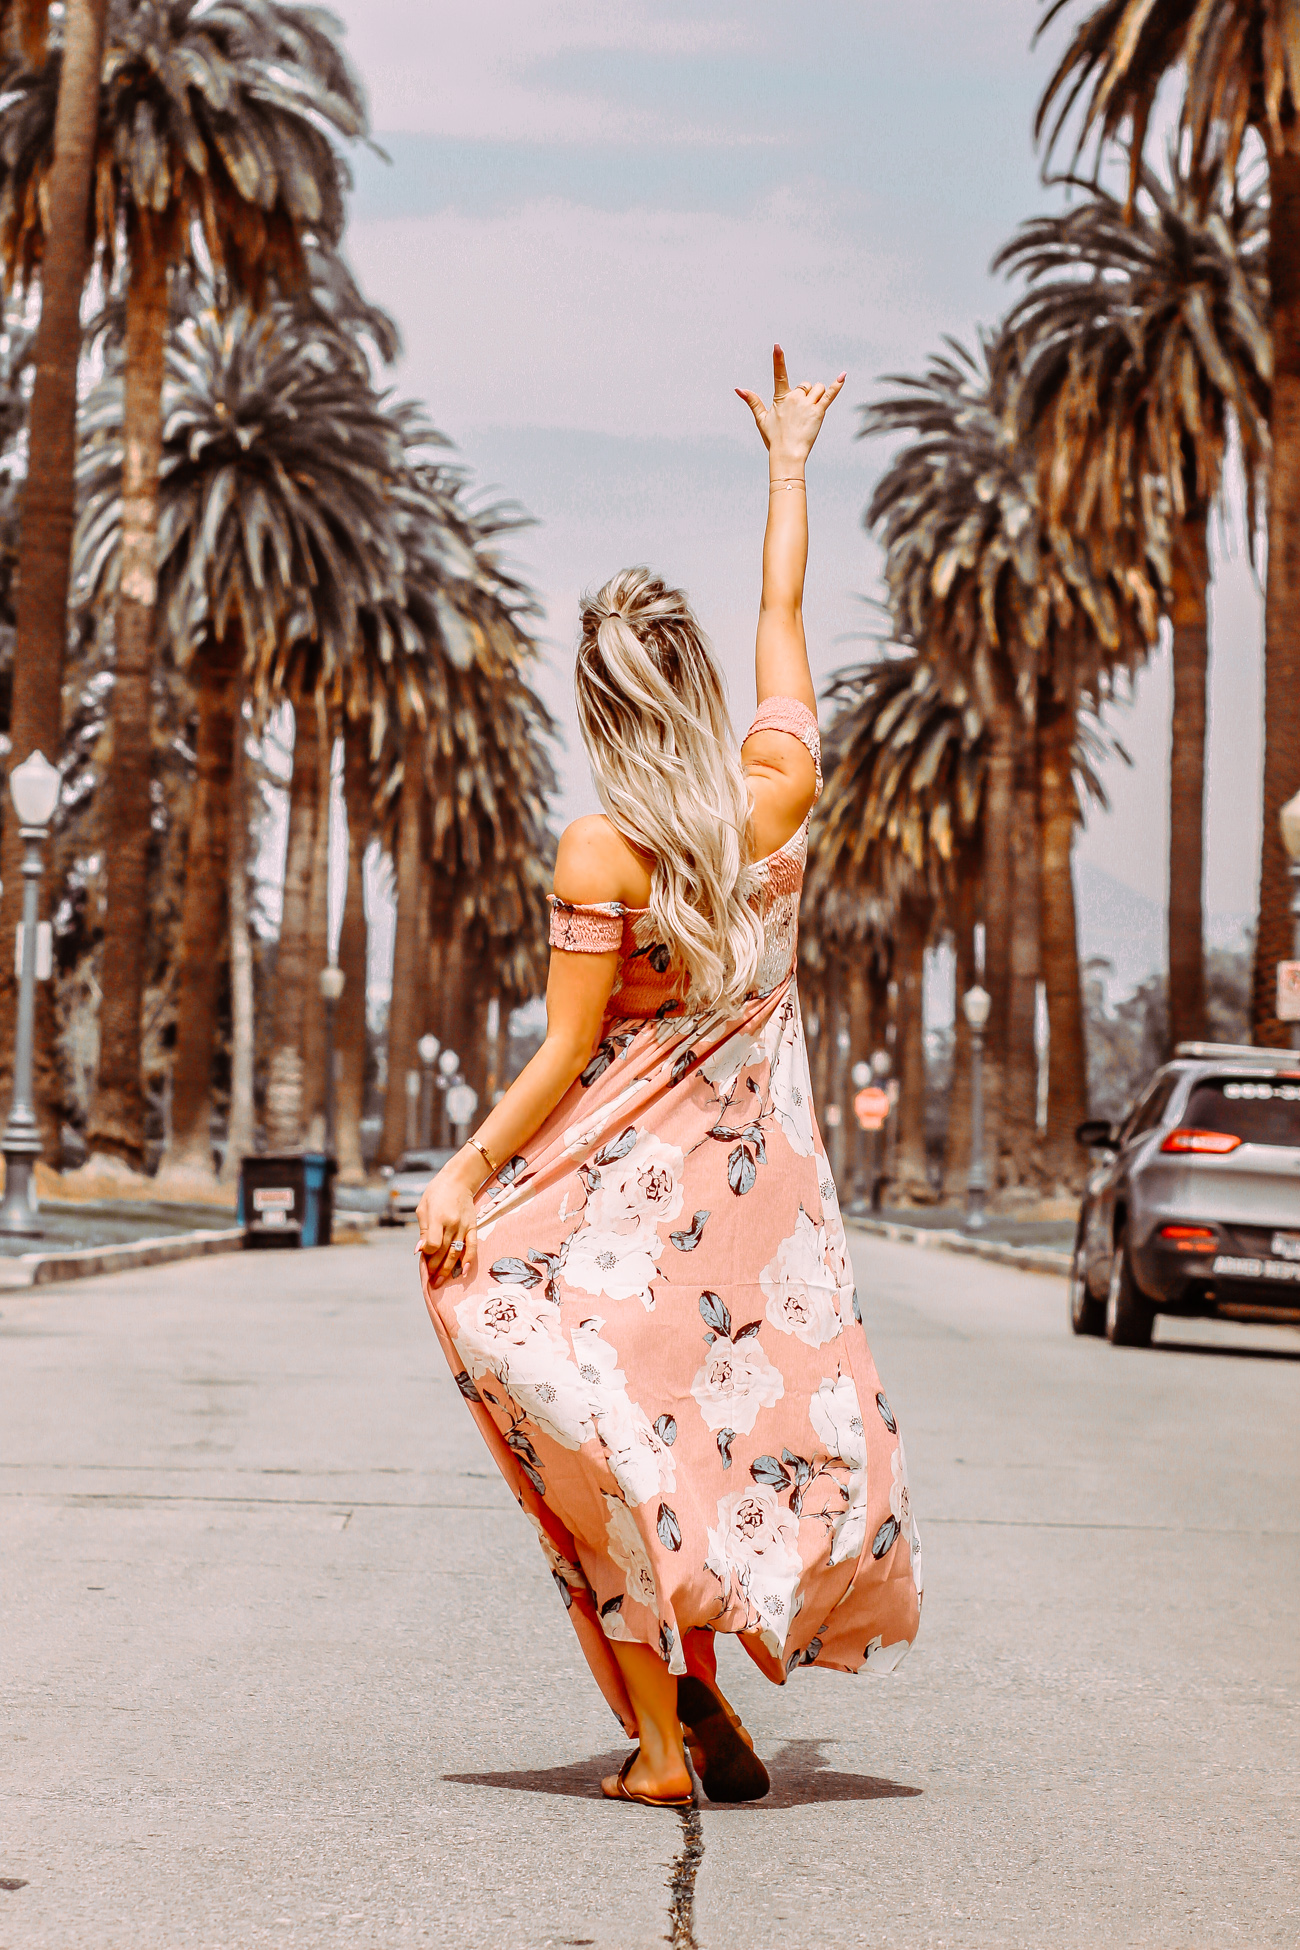 Let's Dress Shop | Spring & Summer Wardrobe | Palm Trees | Blondie in the City by Hayley Larue | @iloveshowpo